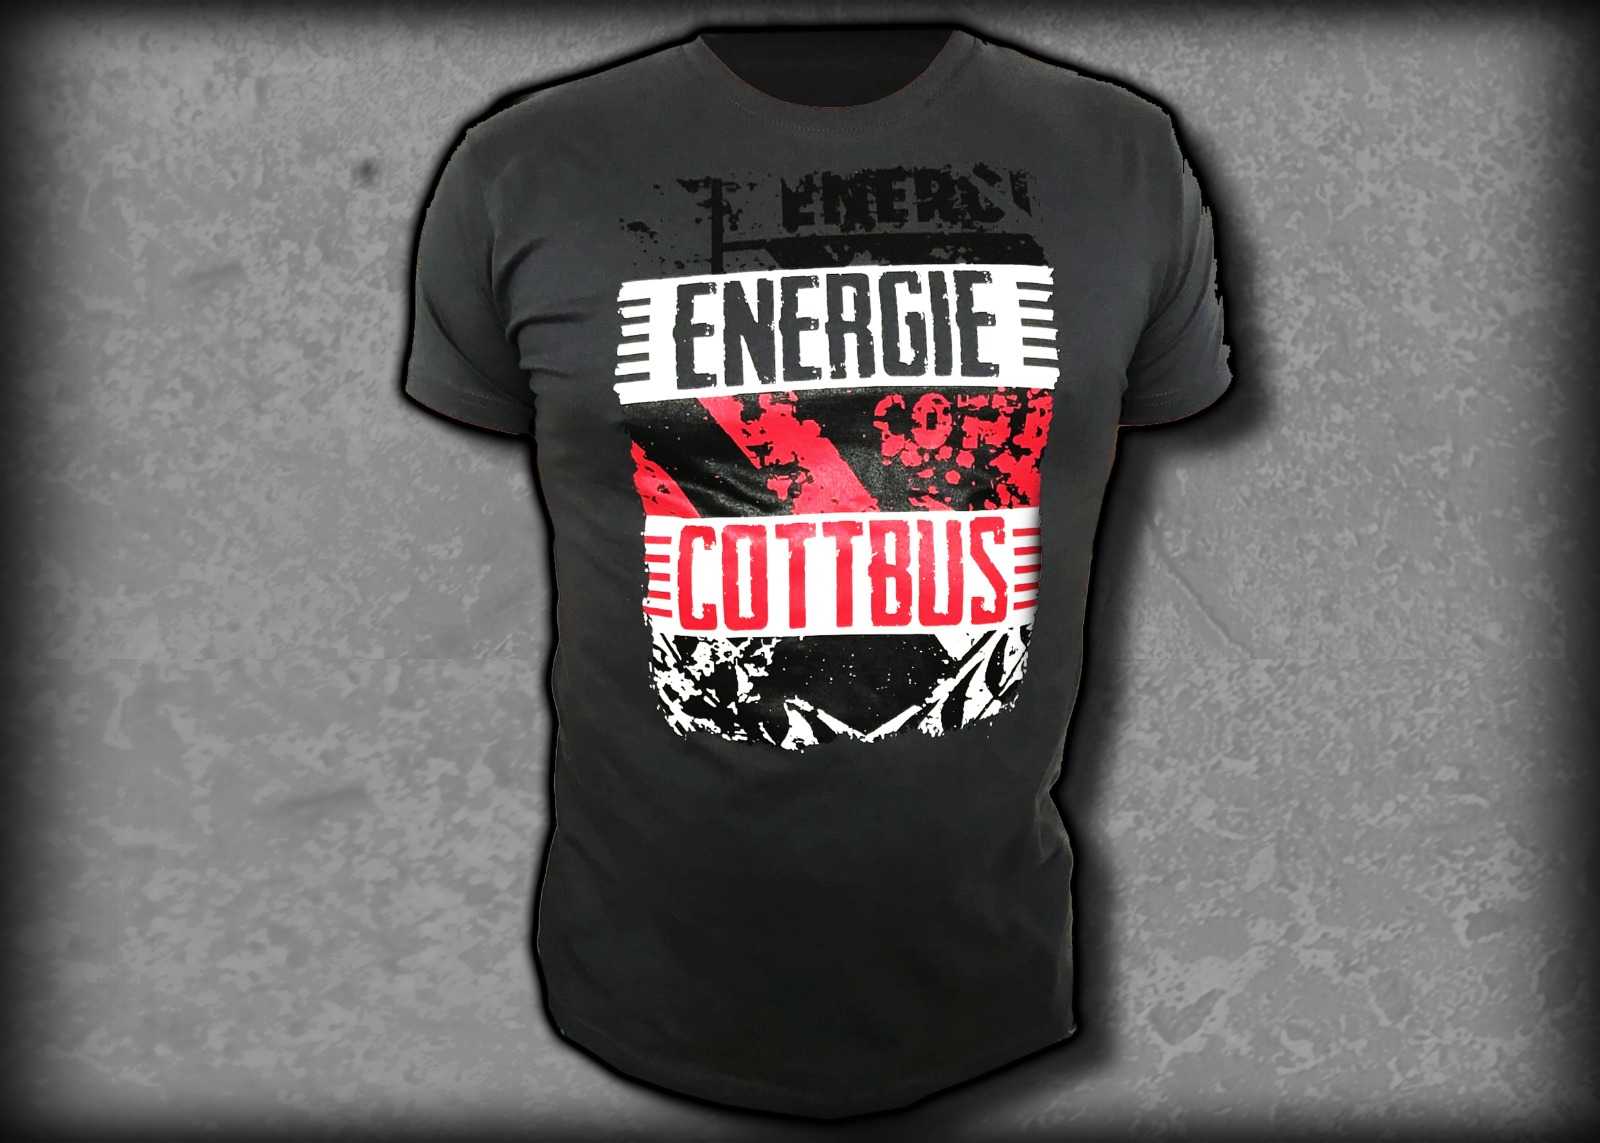 Energie Cottbus - Shirt Image